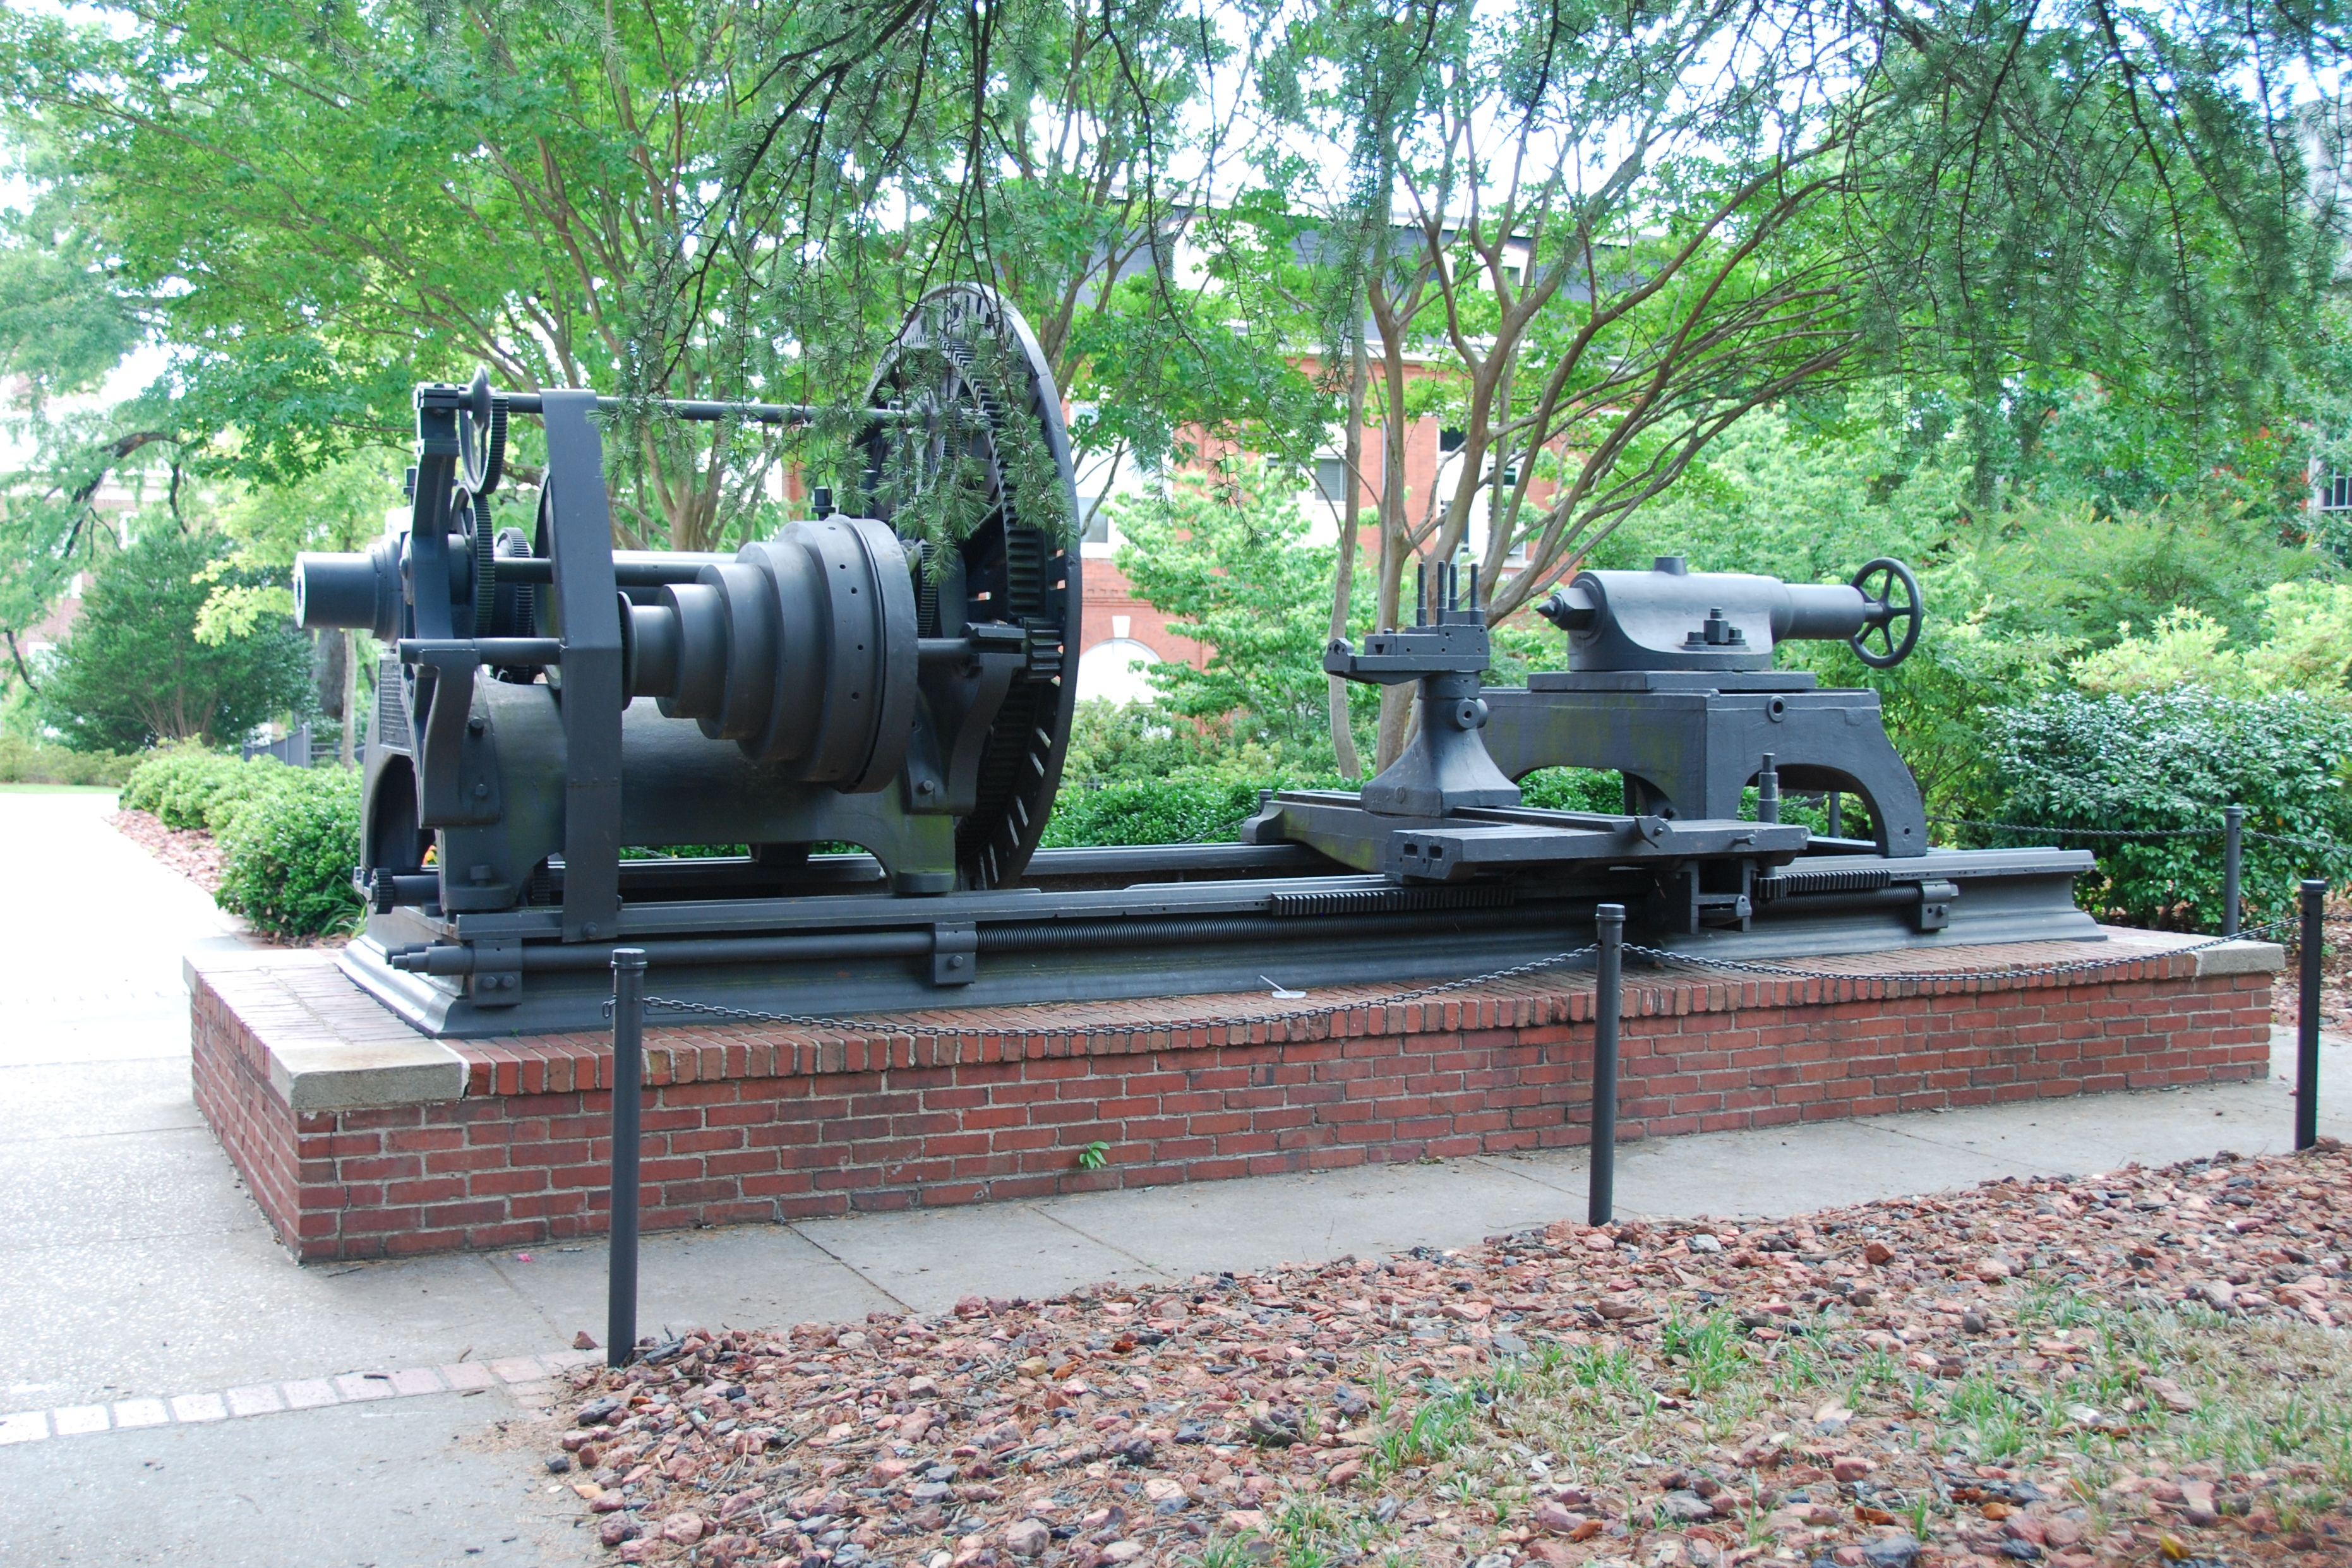 File:Old Metal Lathe - Tour of Auburn University campus for NETC ...